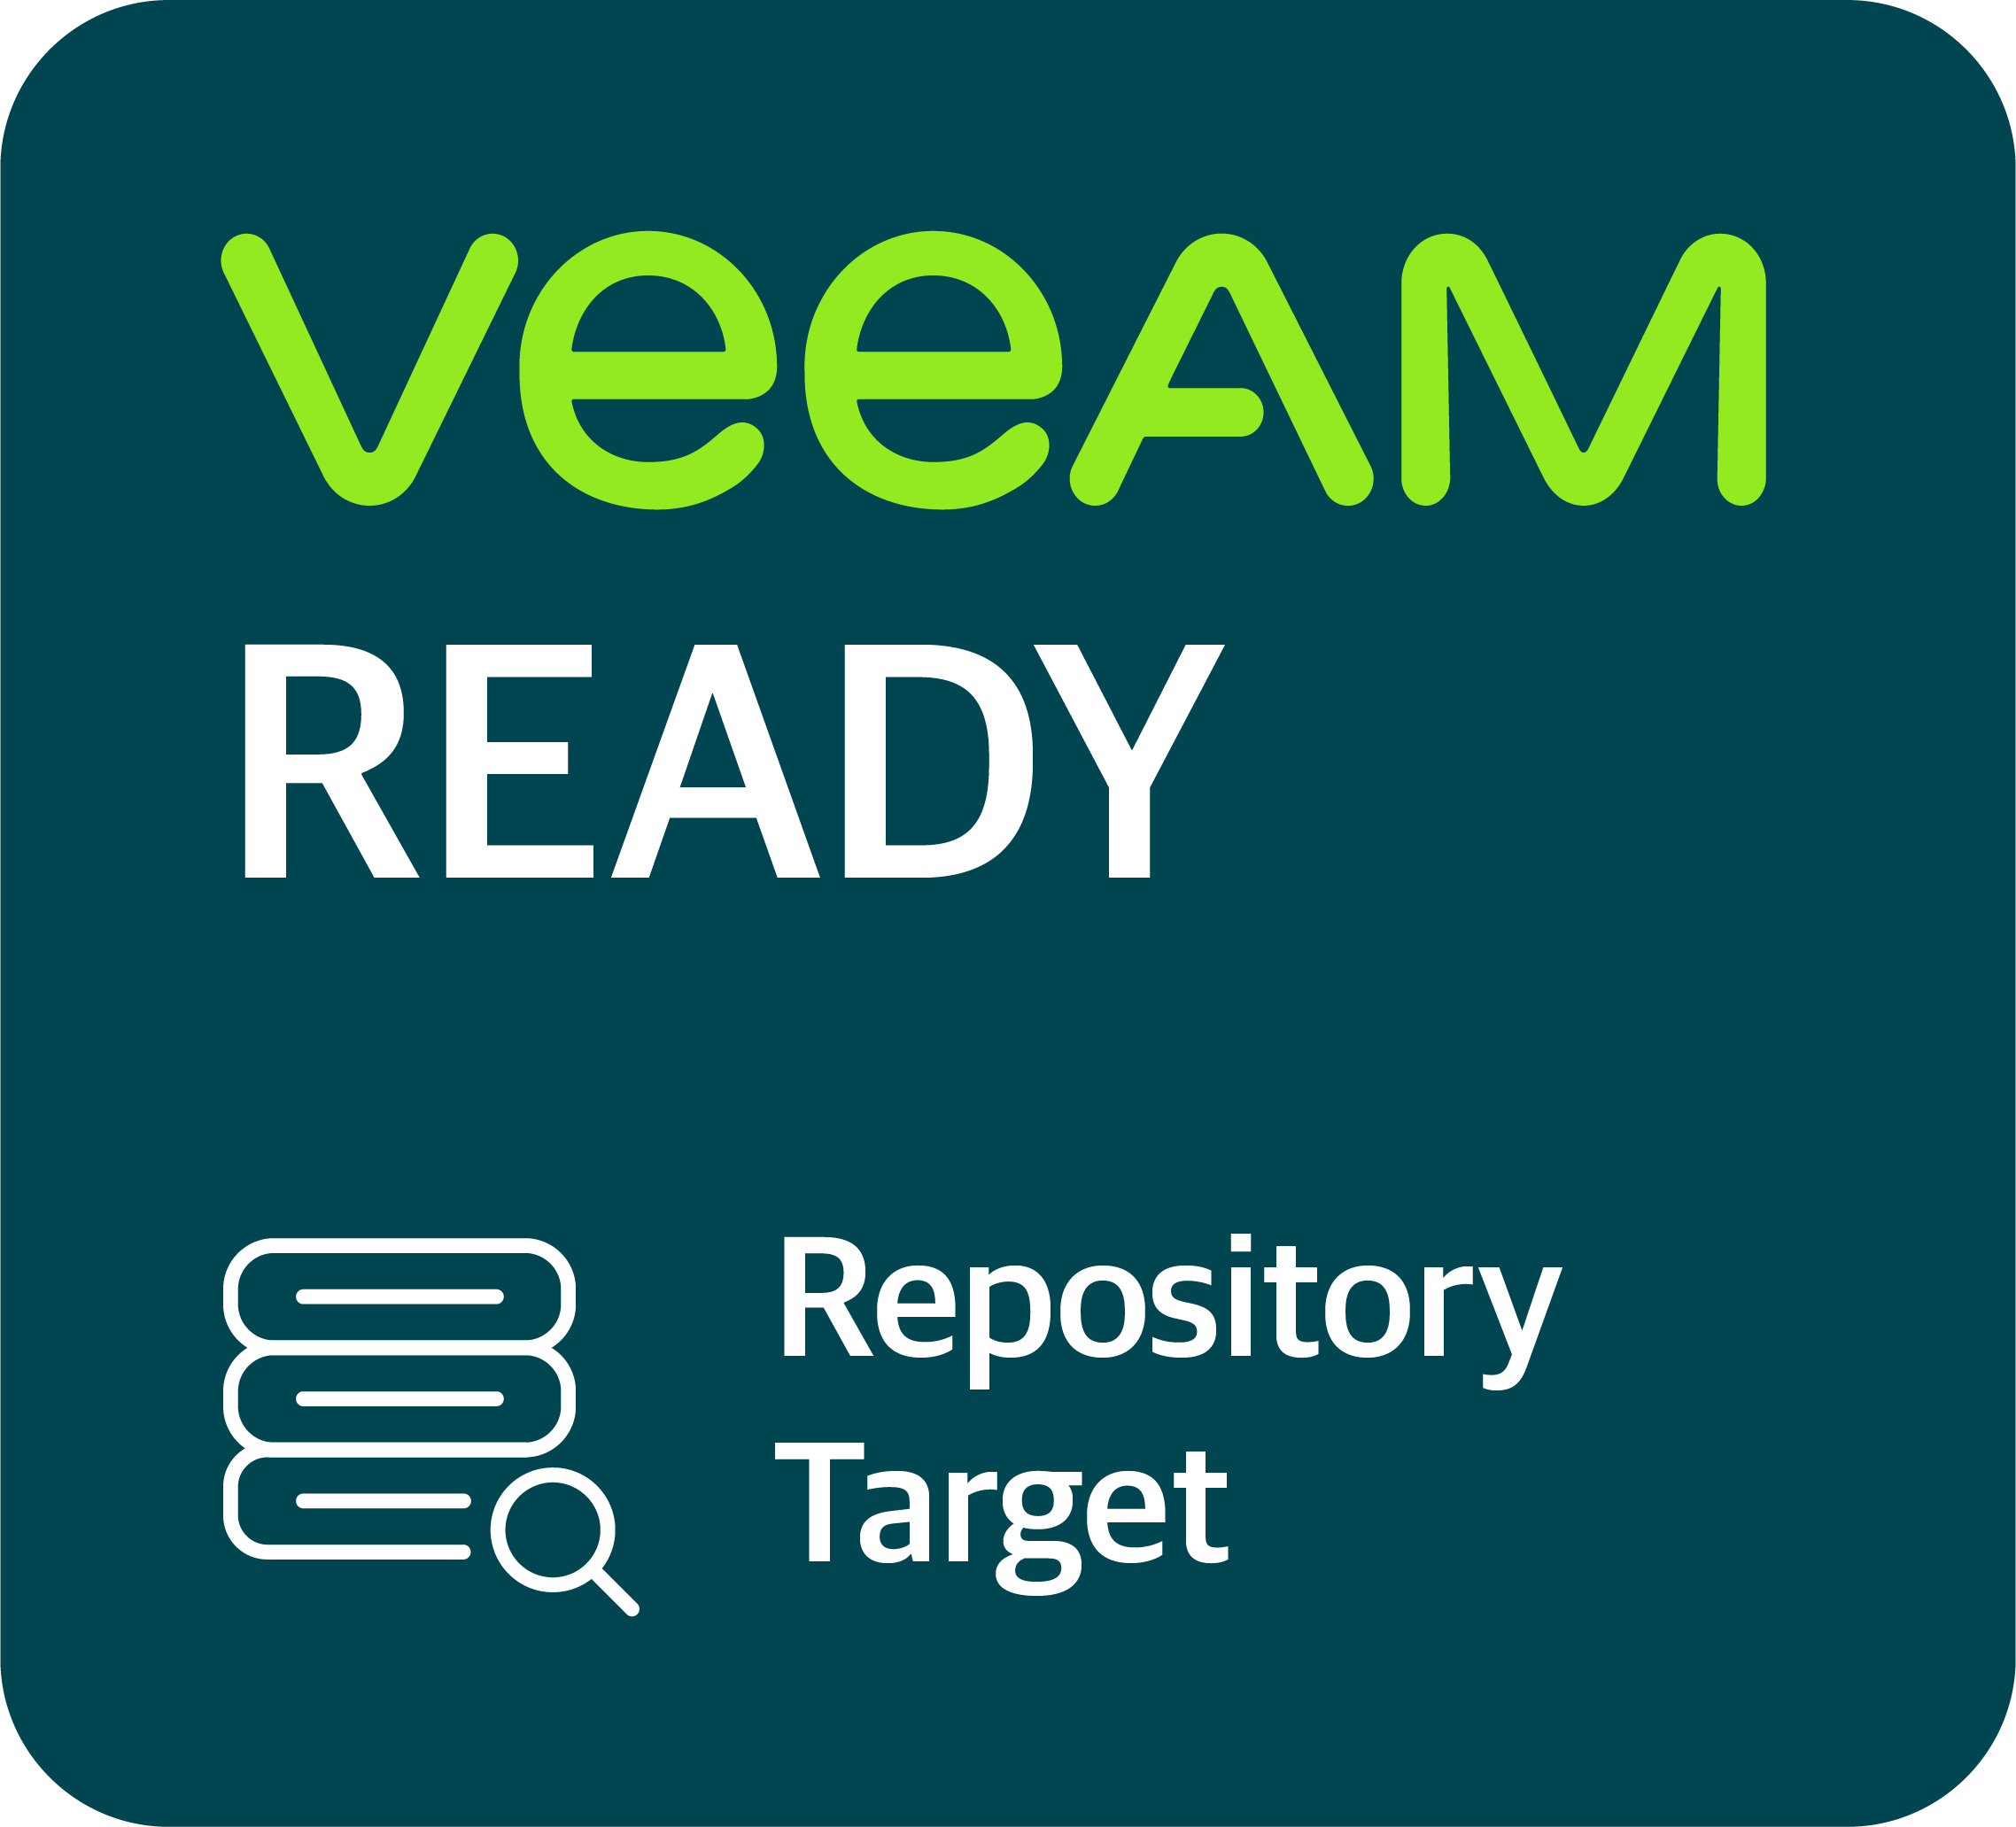 veeam-ready